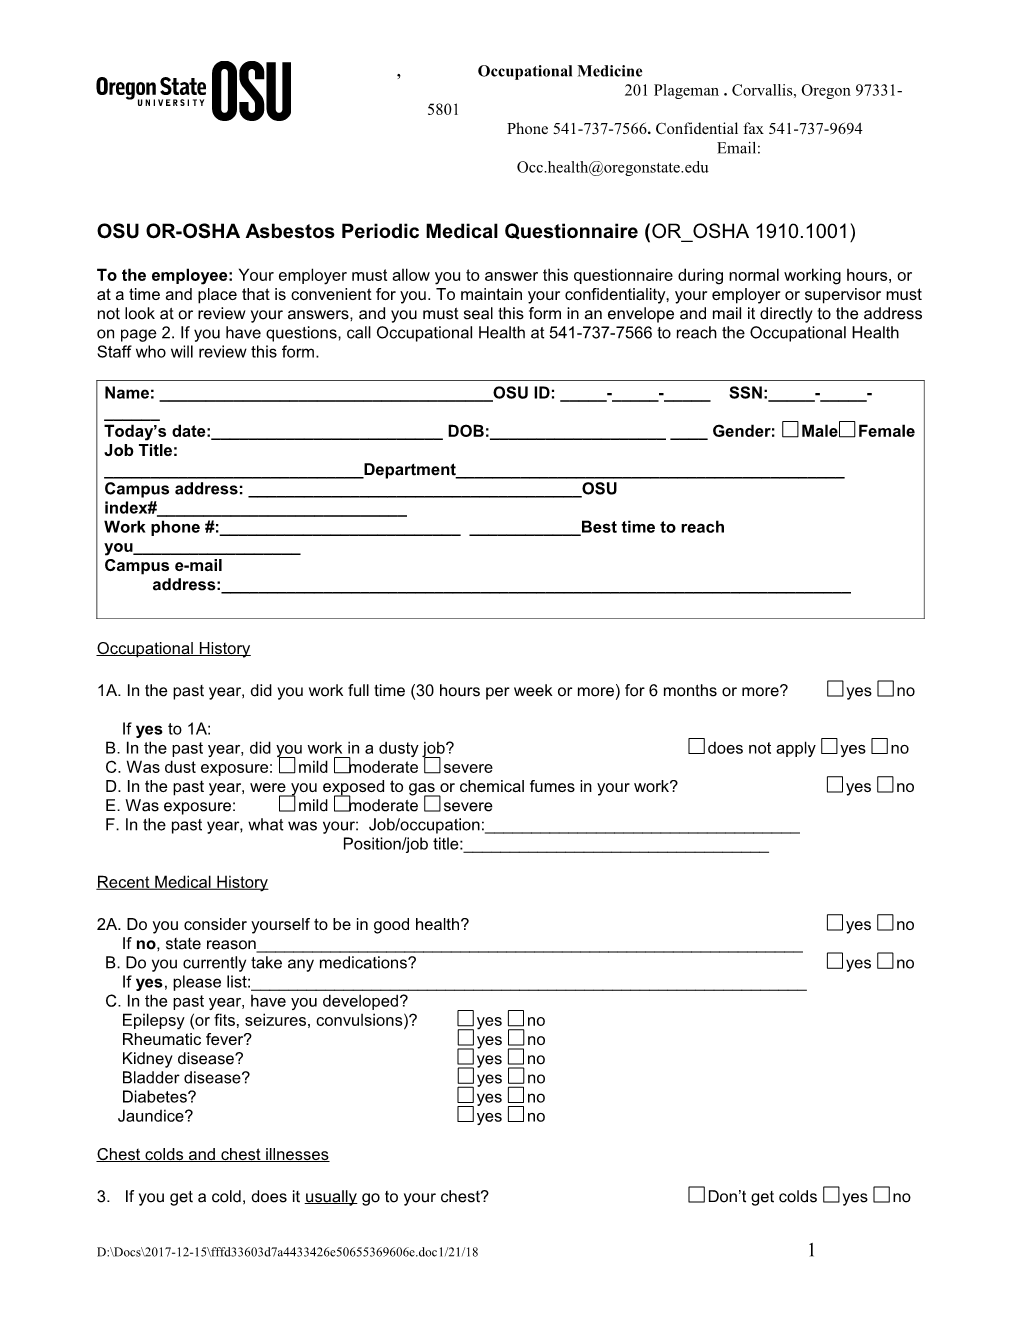 OSU OR-OSHA Asbestos Periodic Medical Questionnaire (OR OSHA 1910